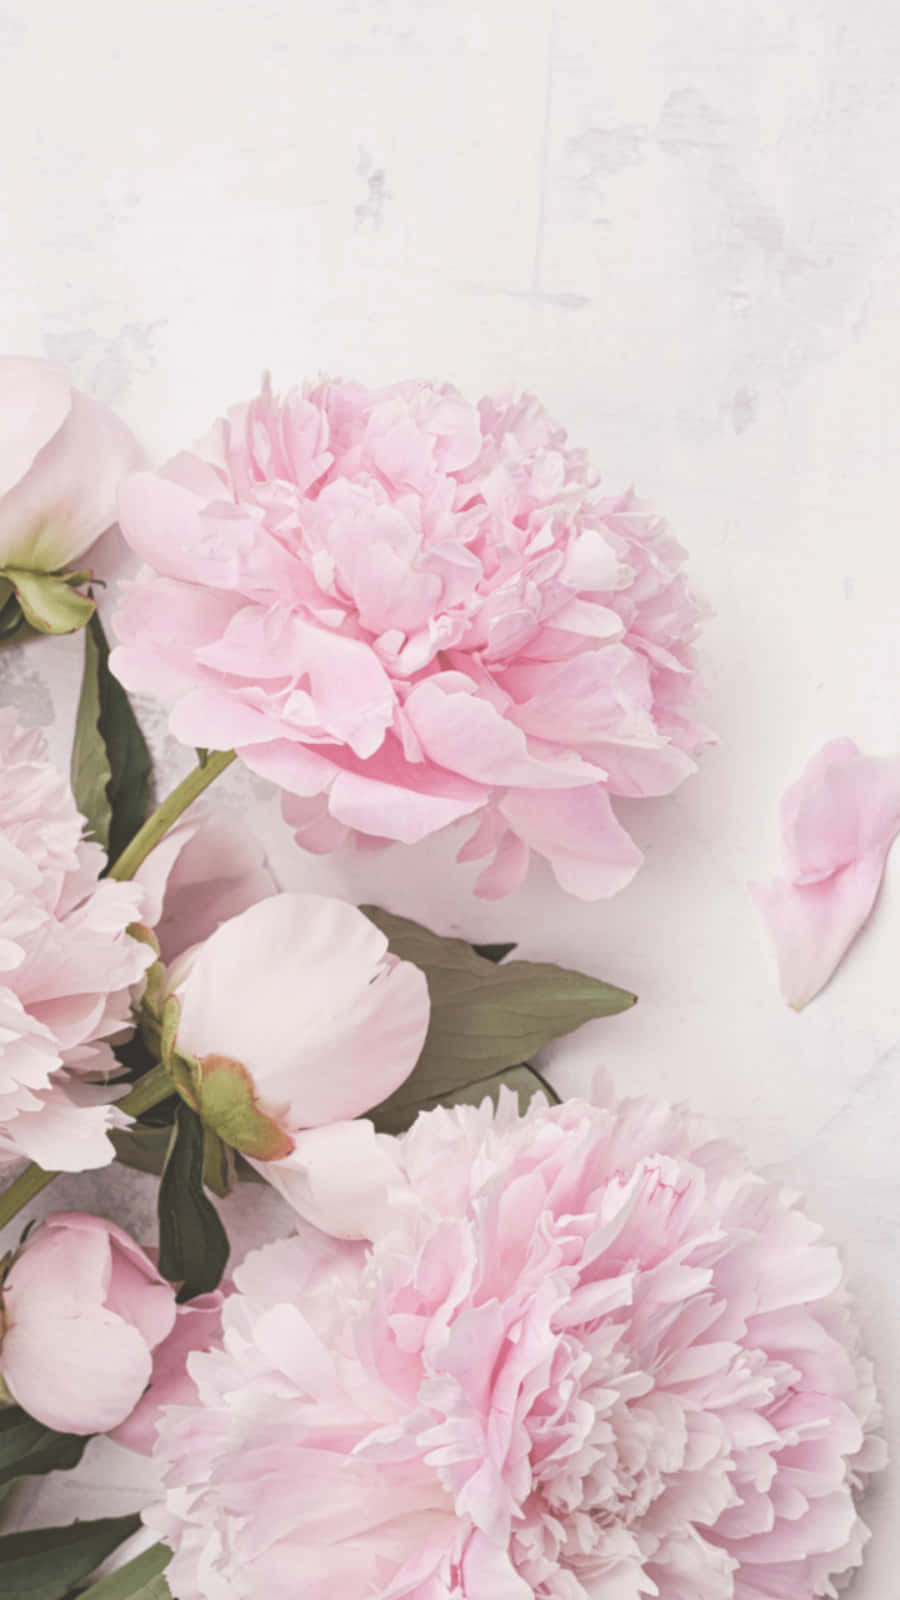 Charming Light Pink Peony iPhone Flower Display Wallpaper